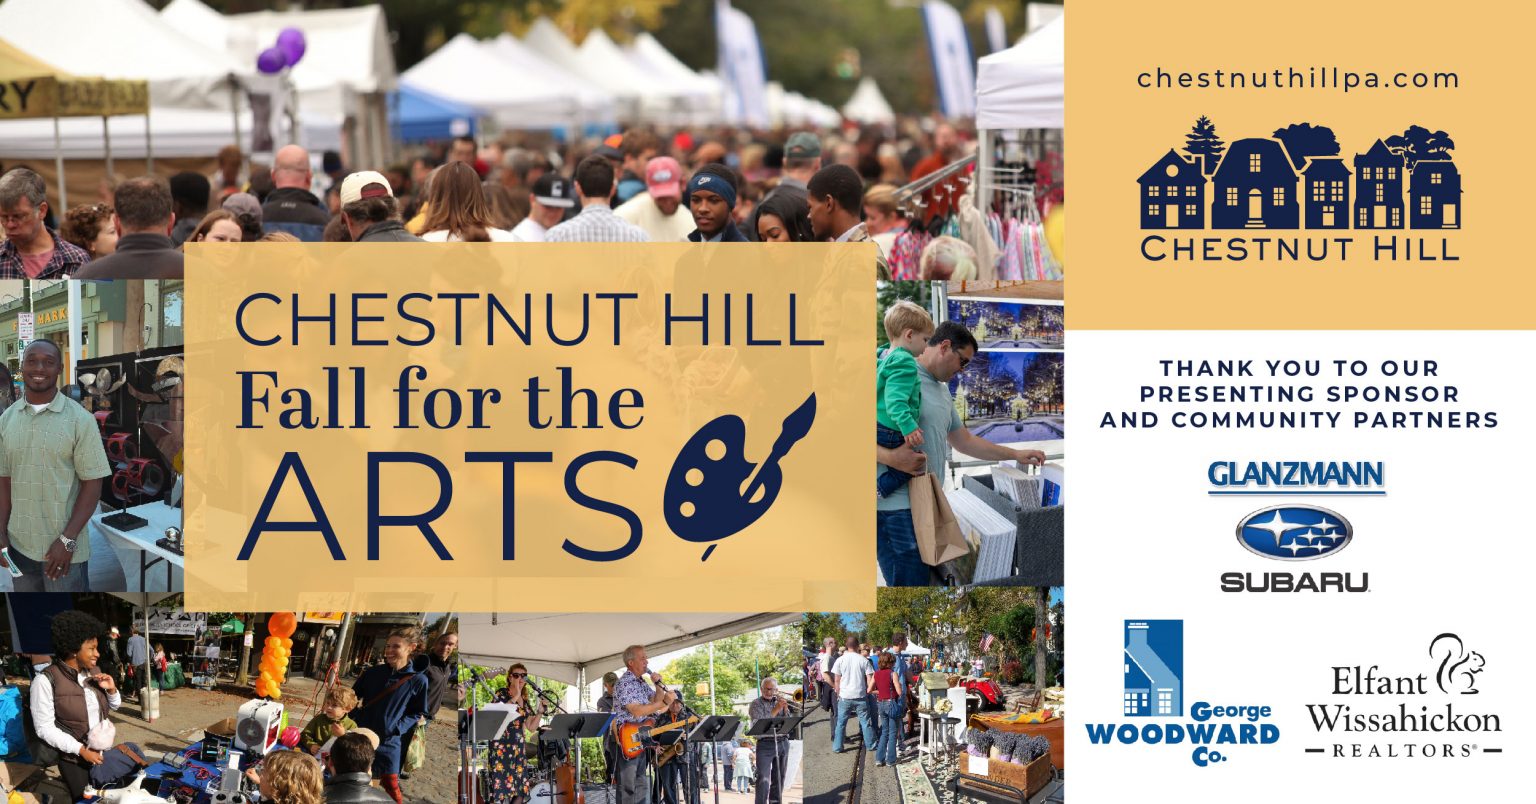 Chestnut Hill Fall for the Arts Festival Chestnut Hill